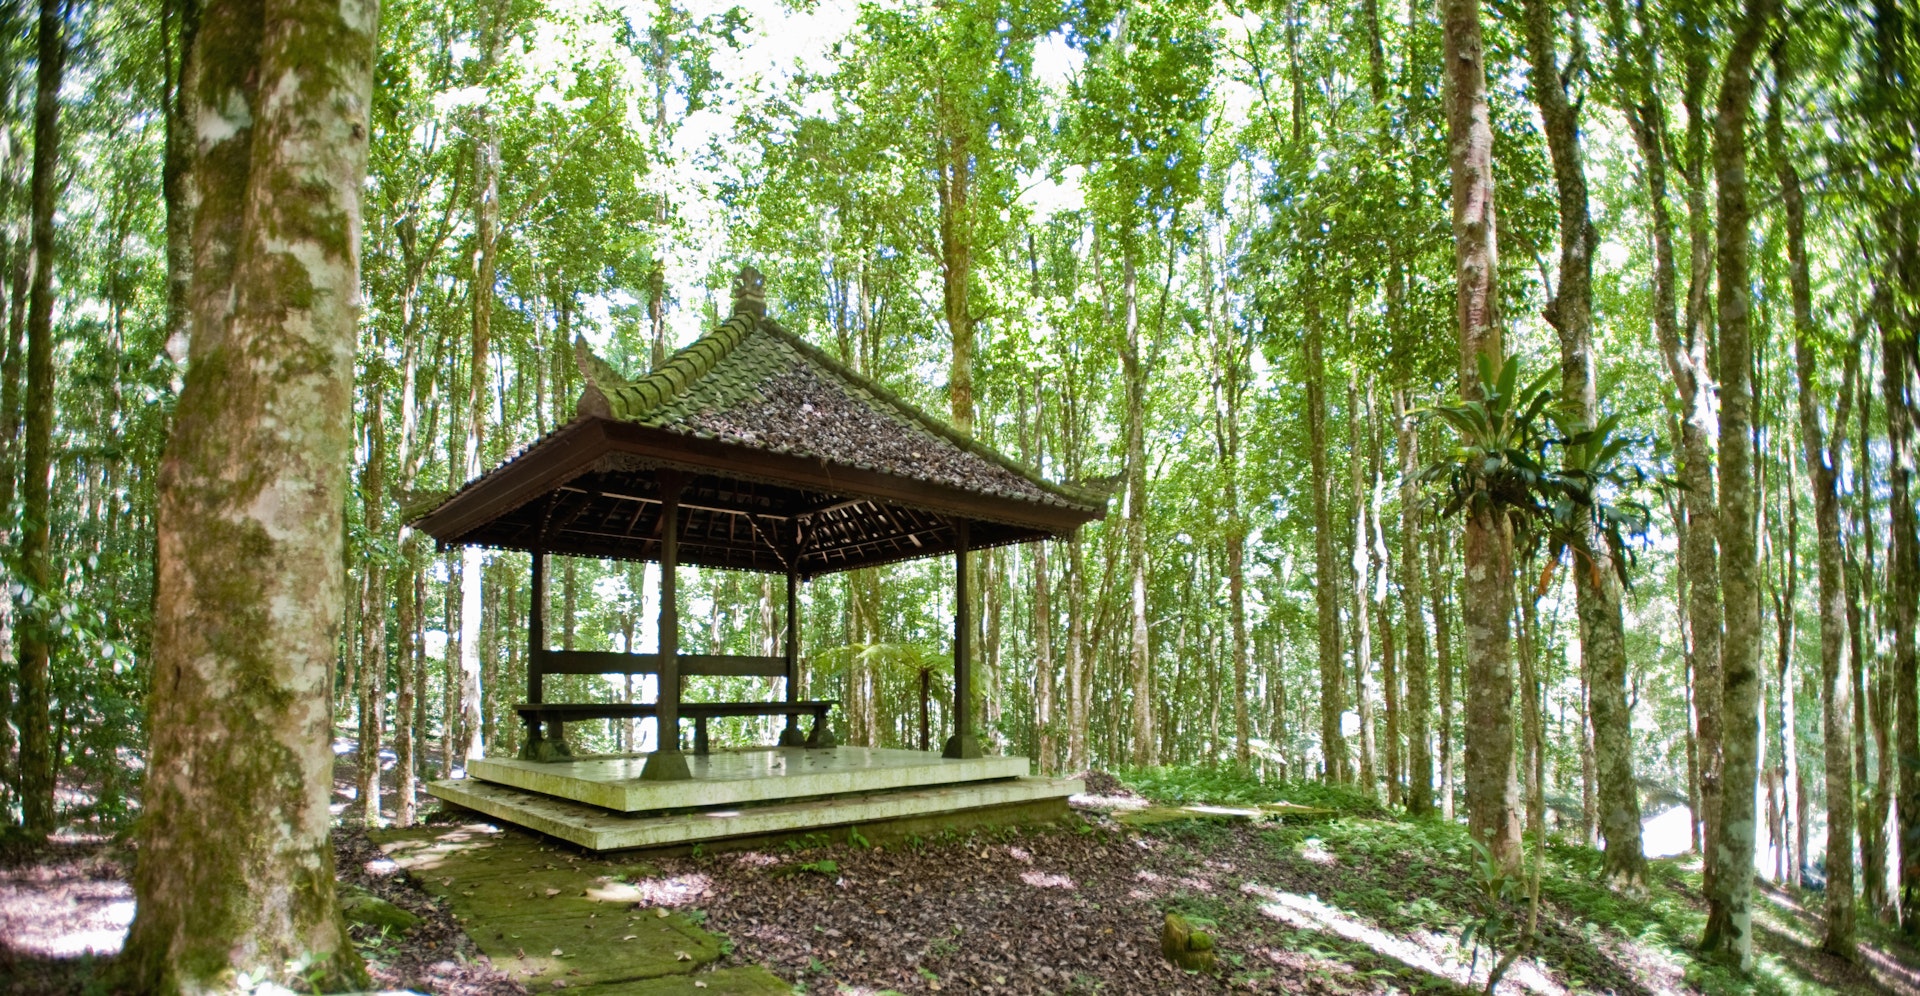 Pagoda in Casuarina forest in Bali